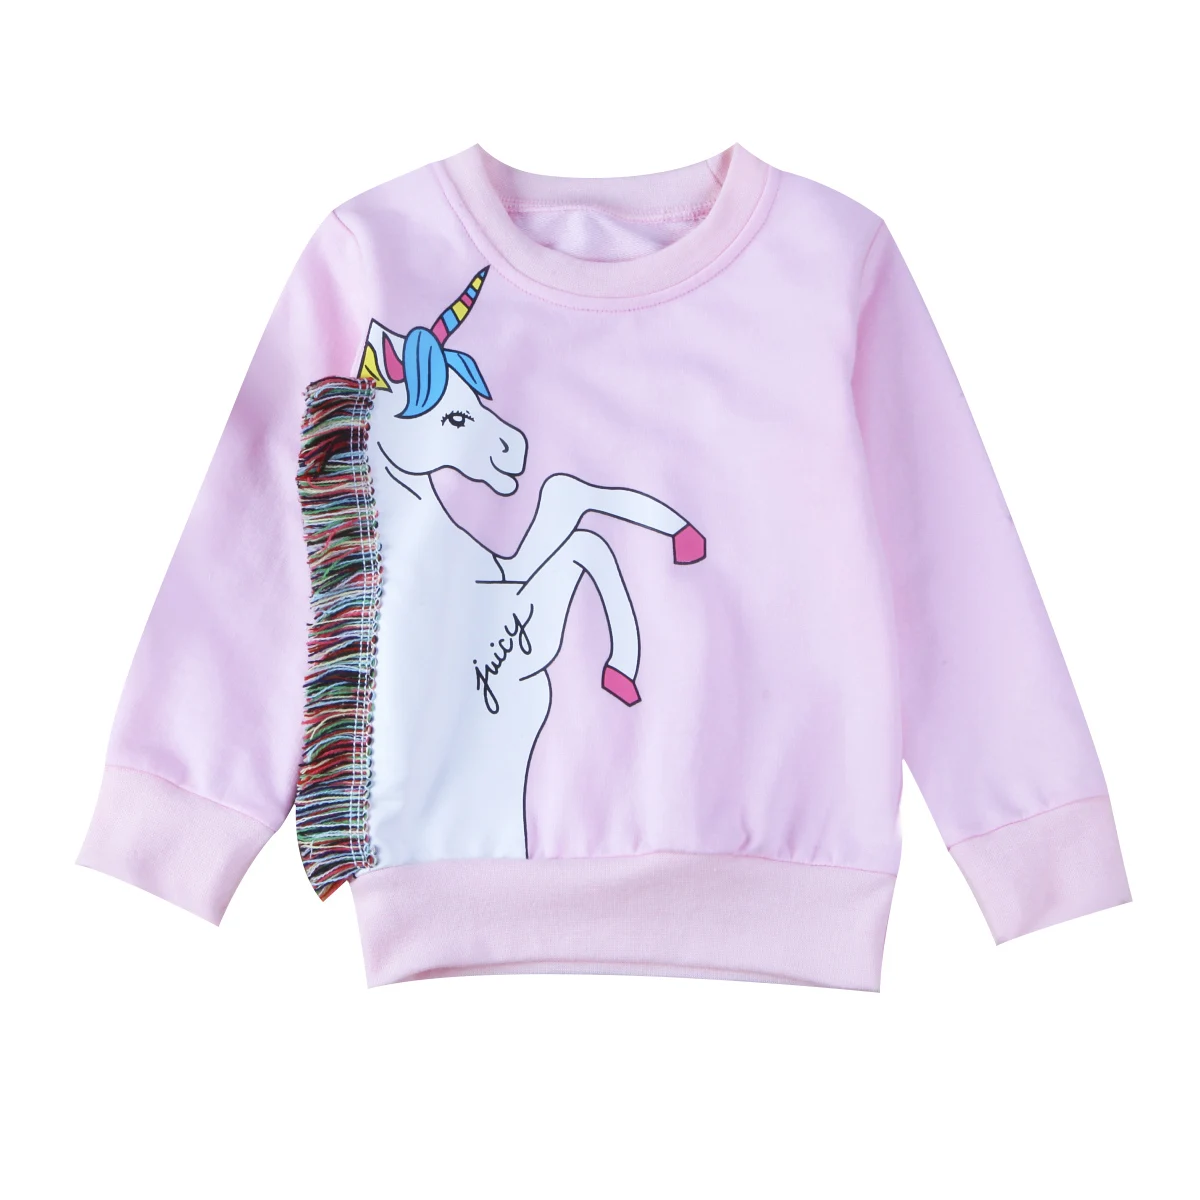 Qiilaro Girls Jumper Long Sleeve Unicorn Rainbow Sweatshirt Cotton Shirt Tops Kids Pullover Children Clothes for Age 3-8 Years